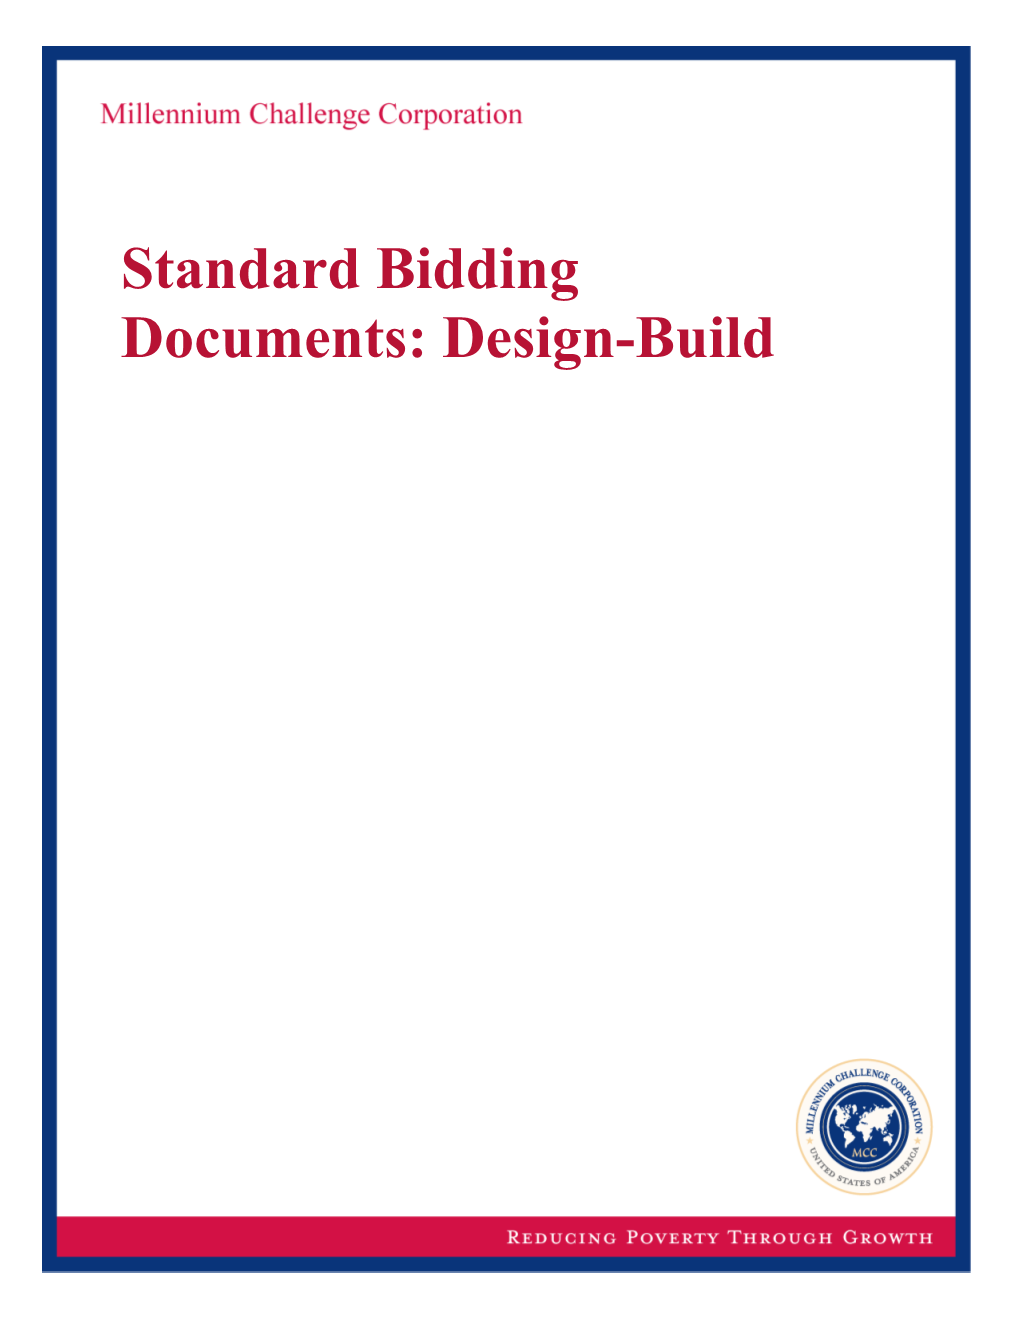 Standard Bidding Document: Design-Build